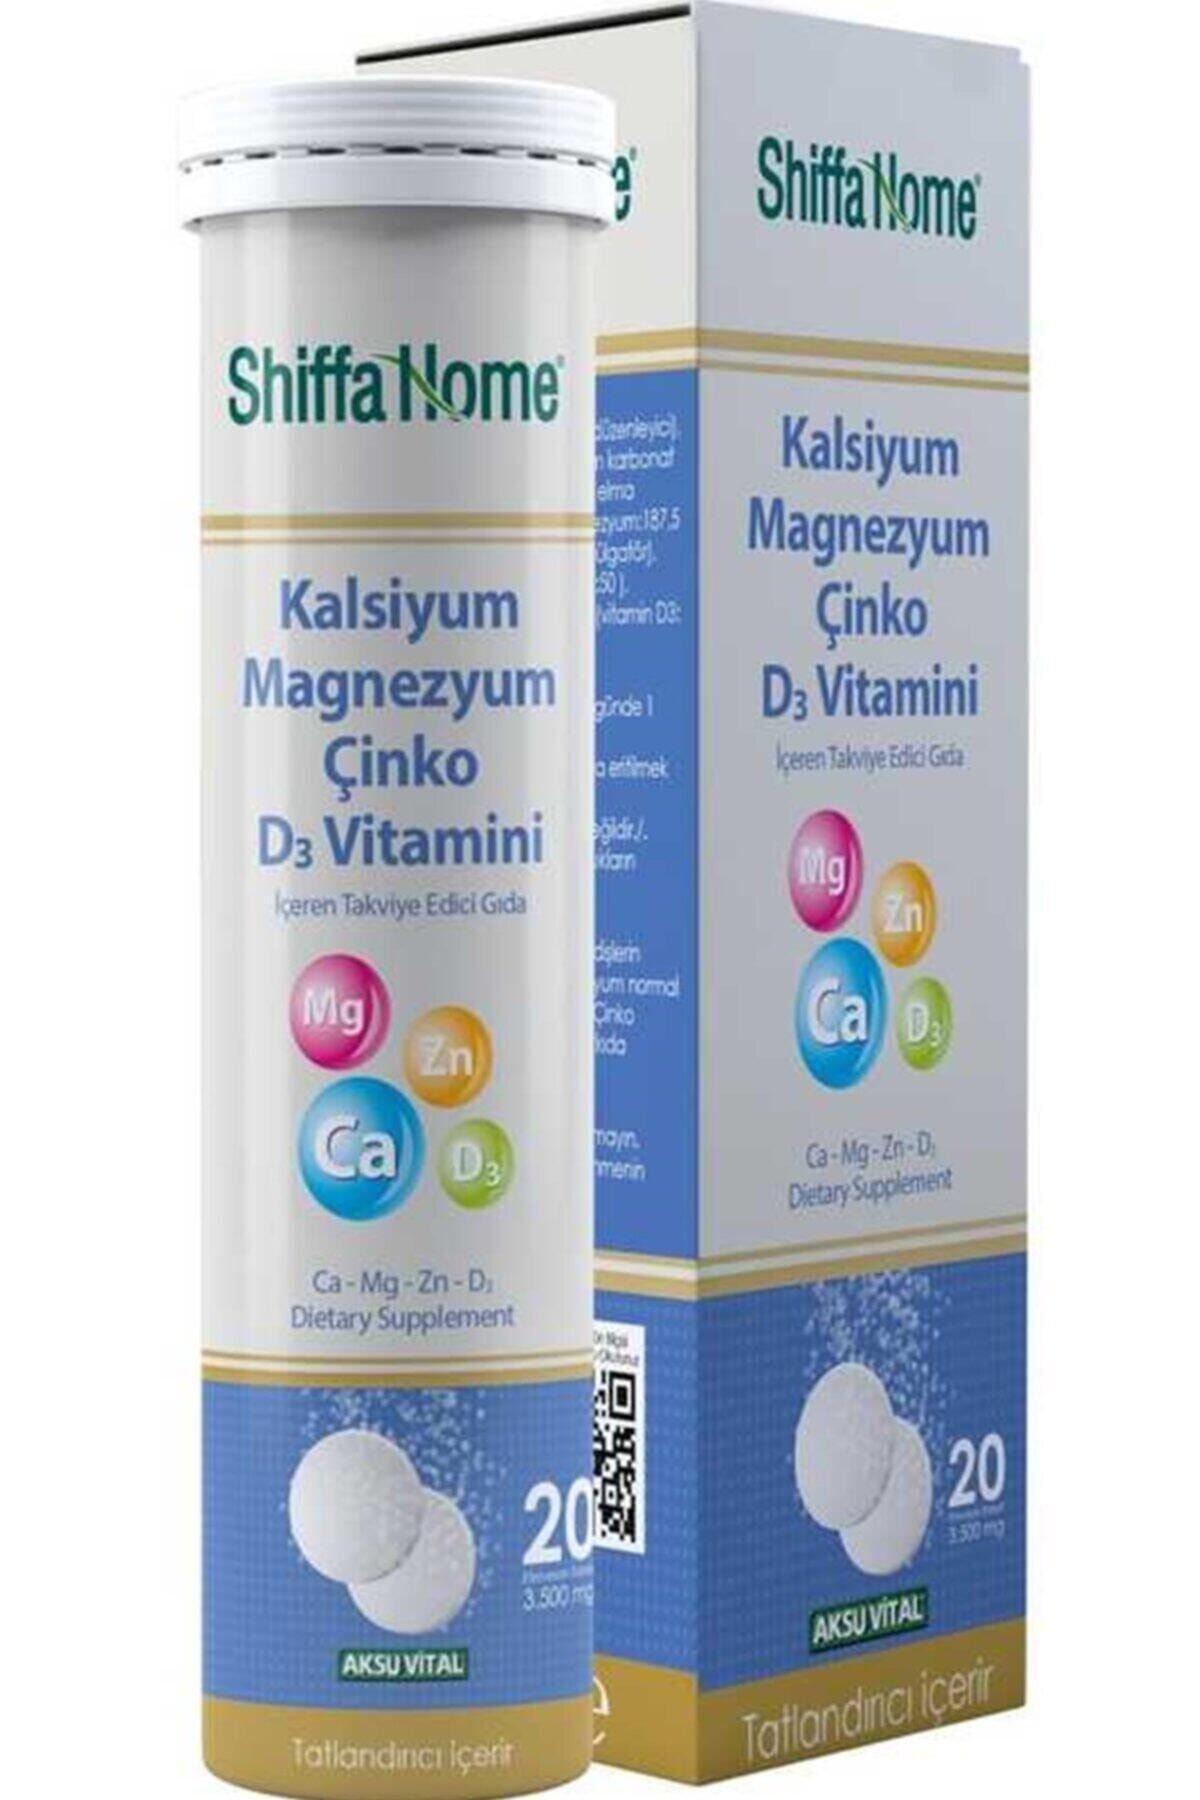 Shiffa Home Kalsiyum - Magnezyum - Çinko - D3 Vitamini